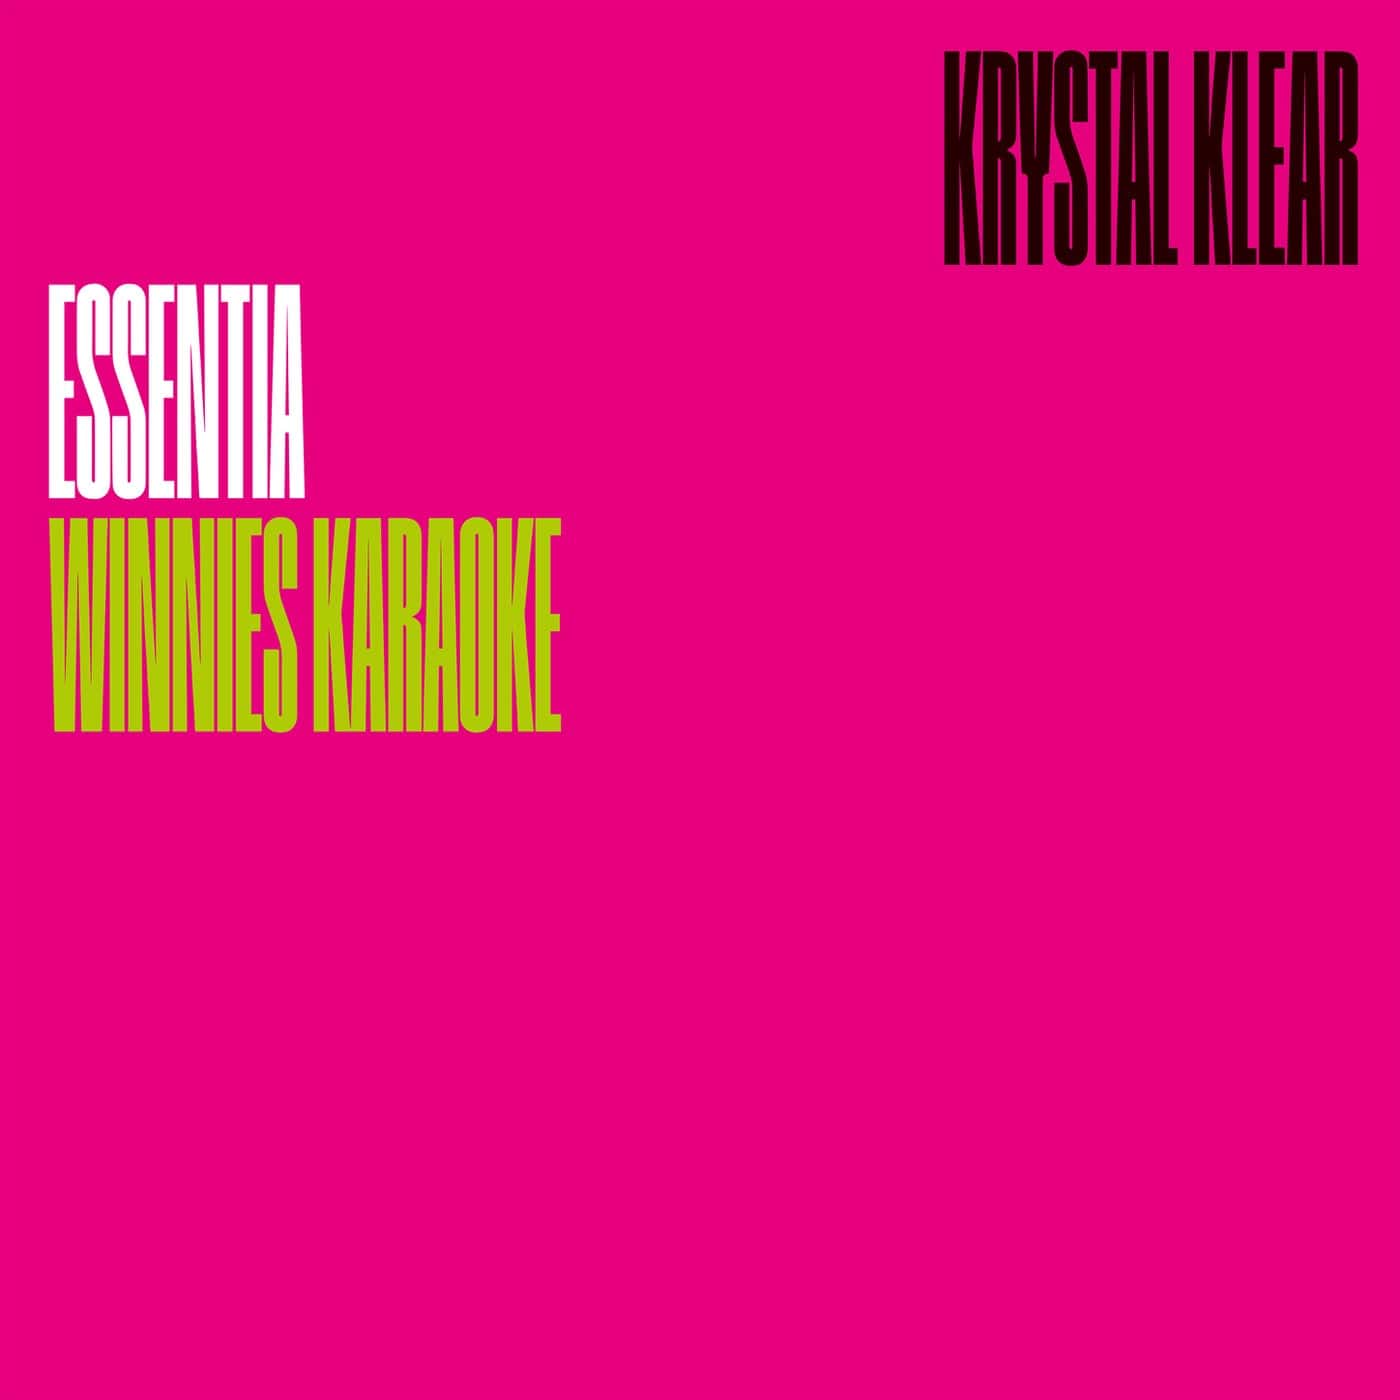 Download Krystal Klear - Essentia on Electrobuzz